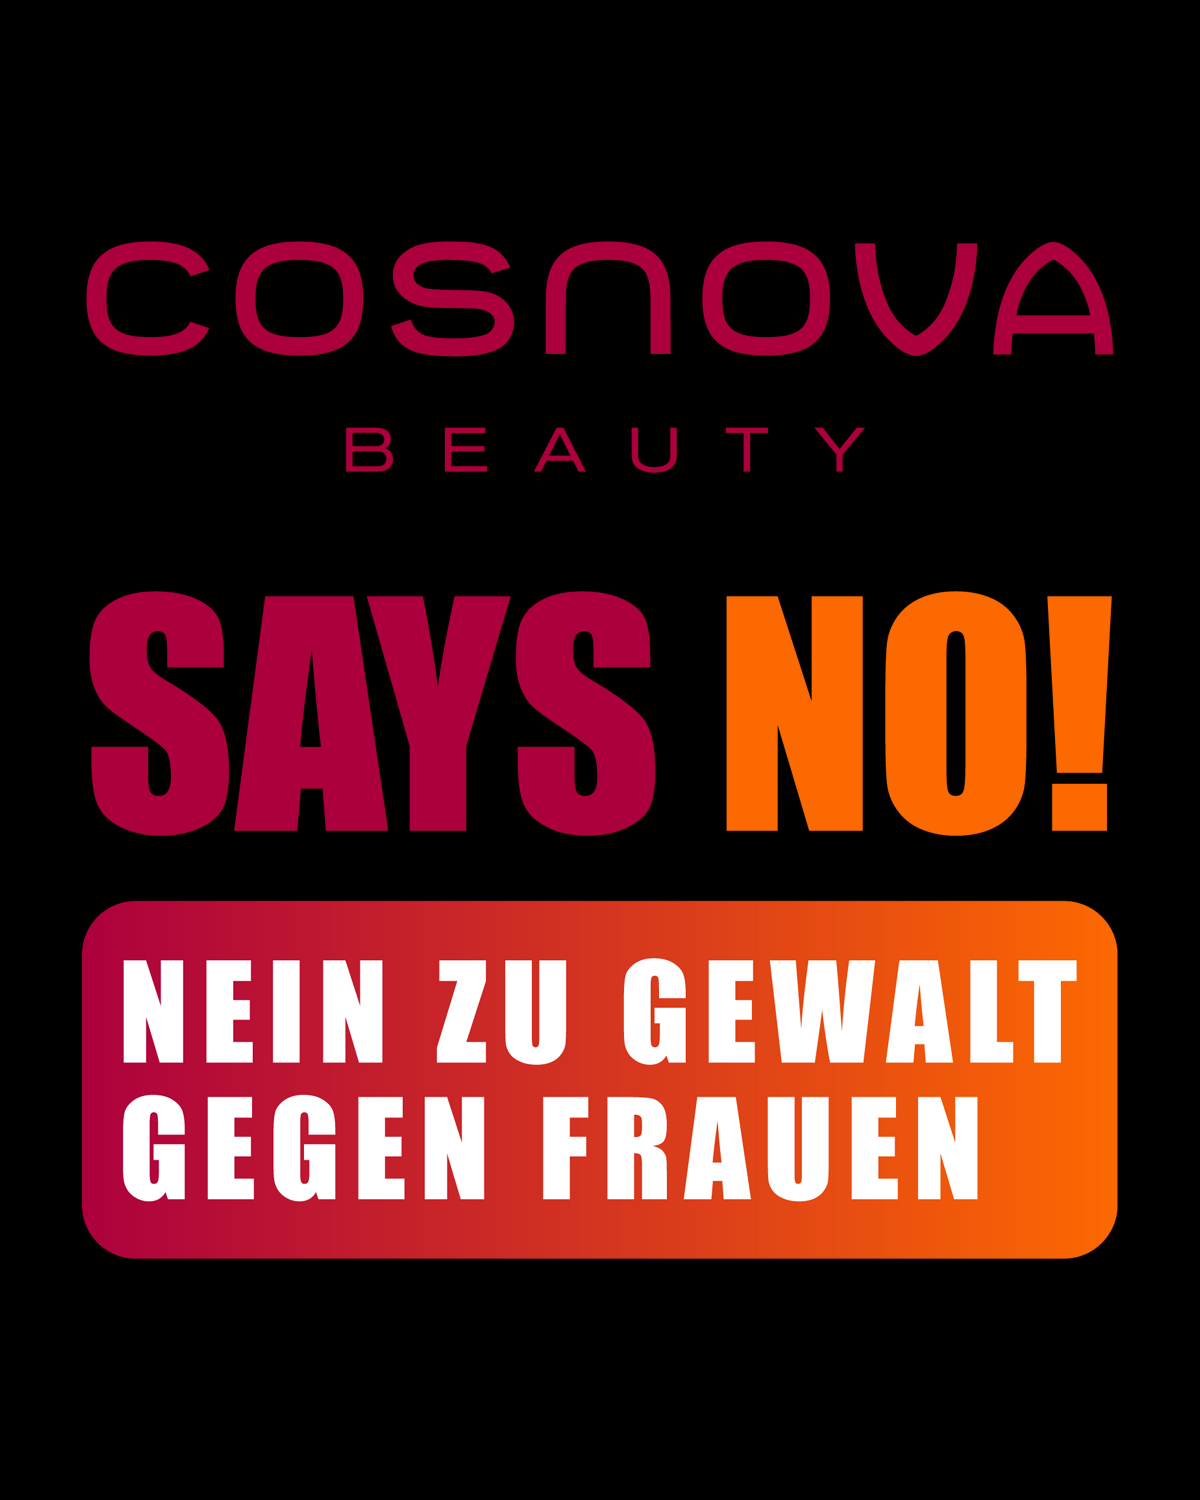 cosnova says NO – gemeinsam gegen Gewalt an Frauen